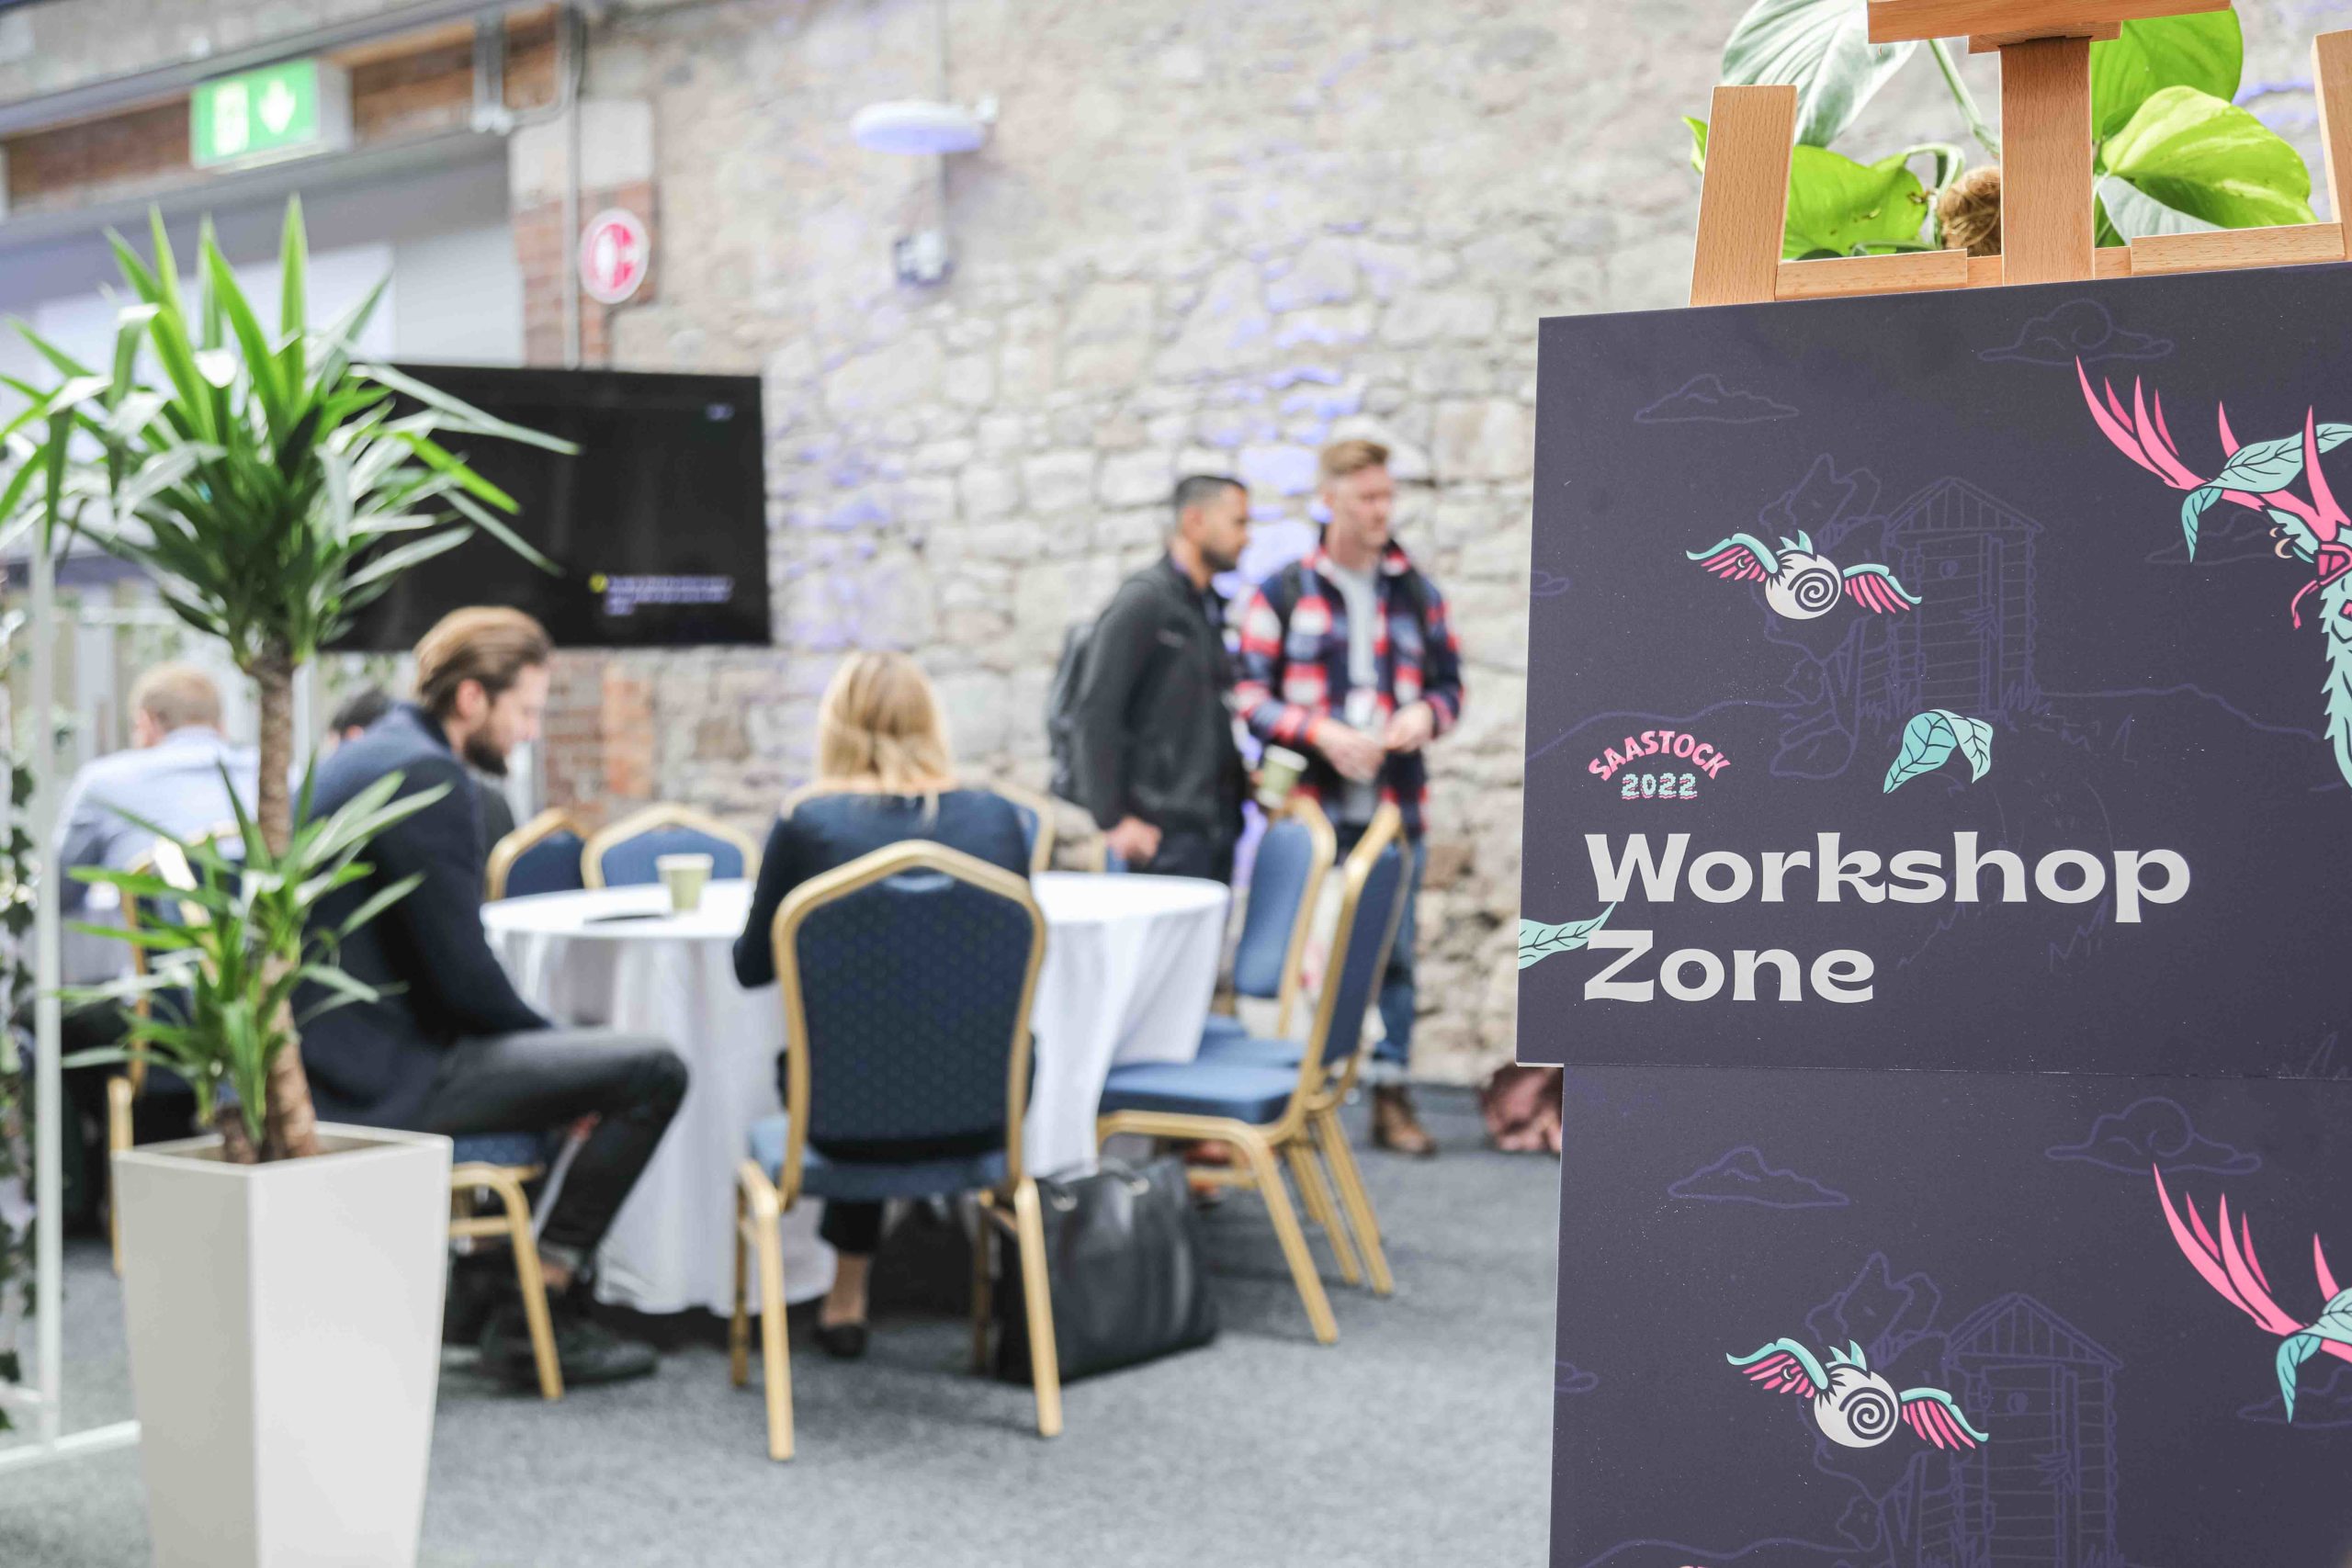 SaaStock 2022 workshop zone